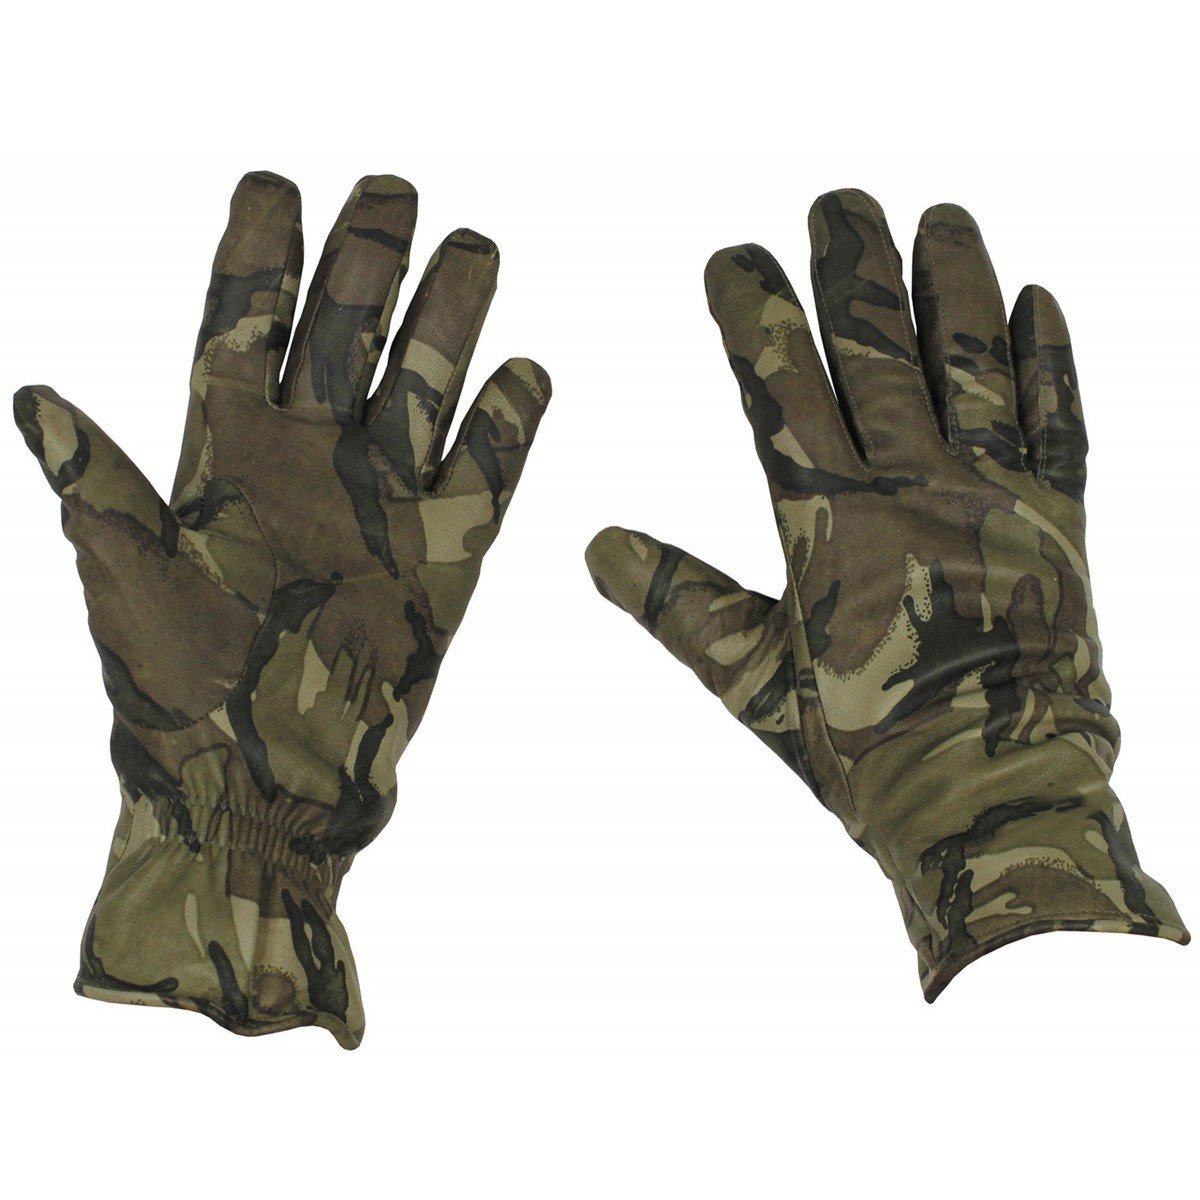 Rukavice kožené zateplené MK II Combat Glove MTP Velká Británie originál Velikost: 8 / S (17-20 cm) použité